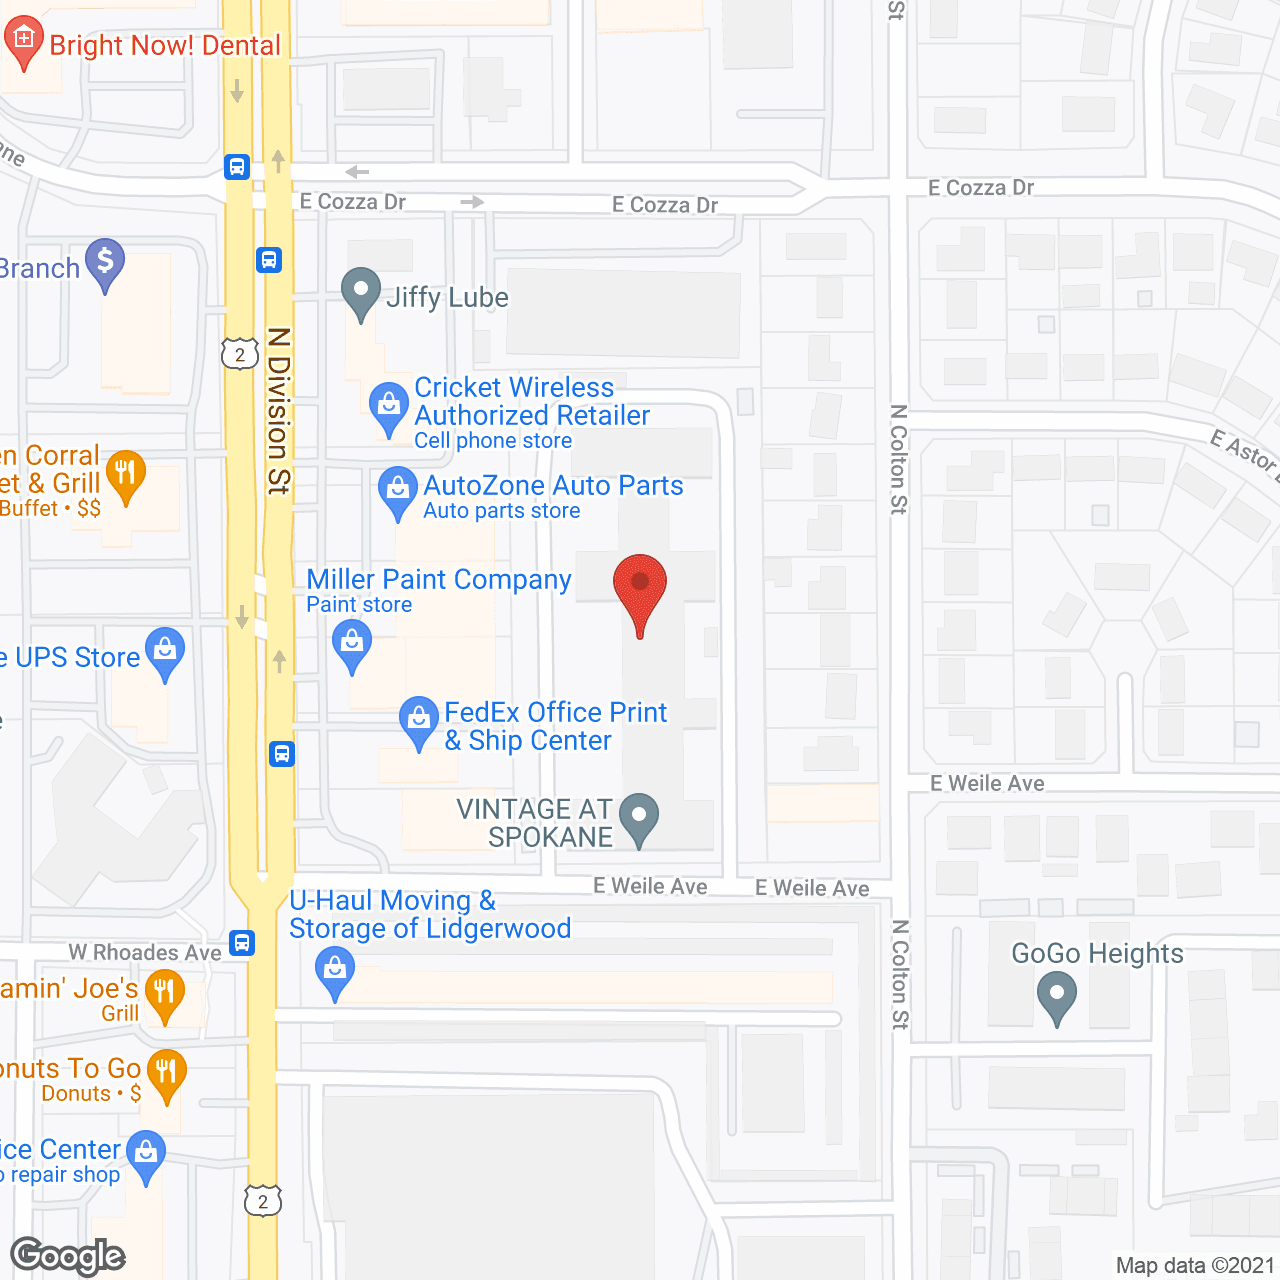 Vintage at Spokane in google map